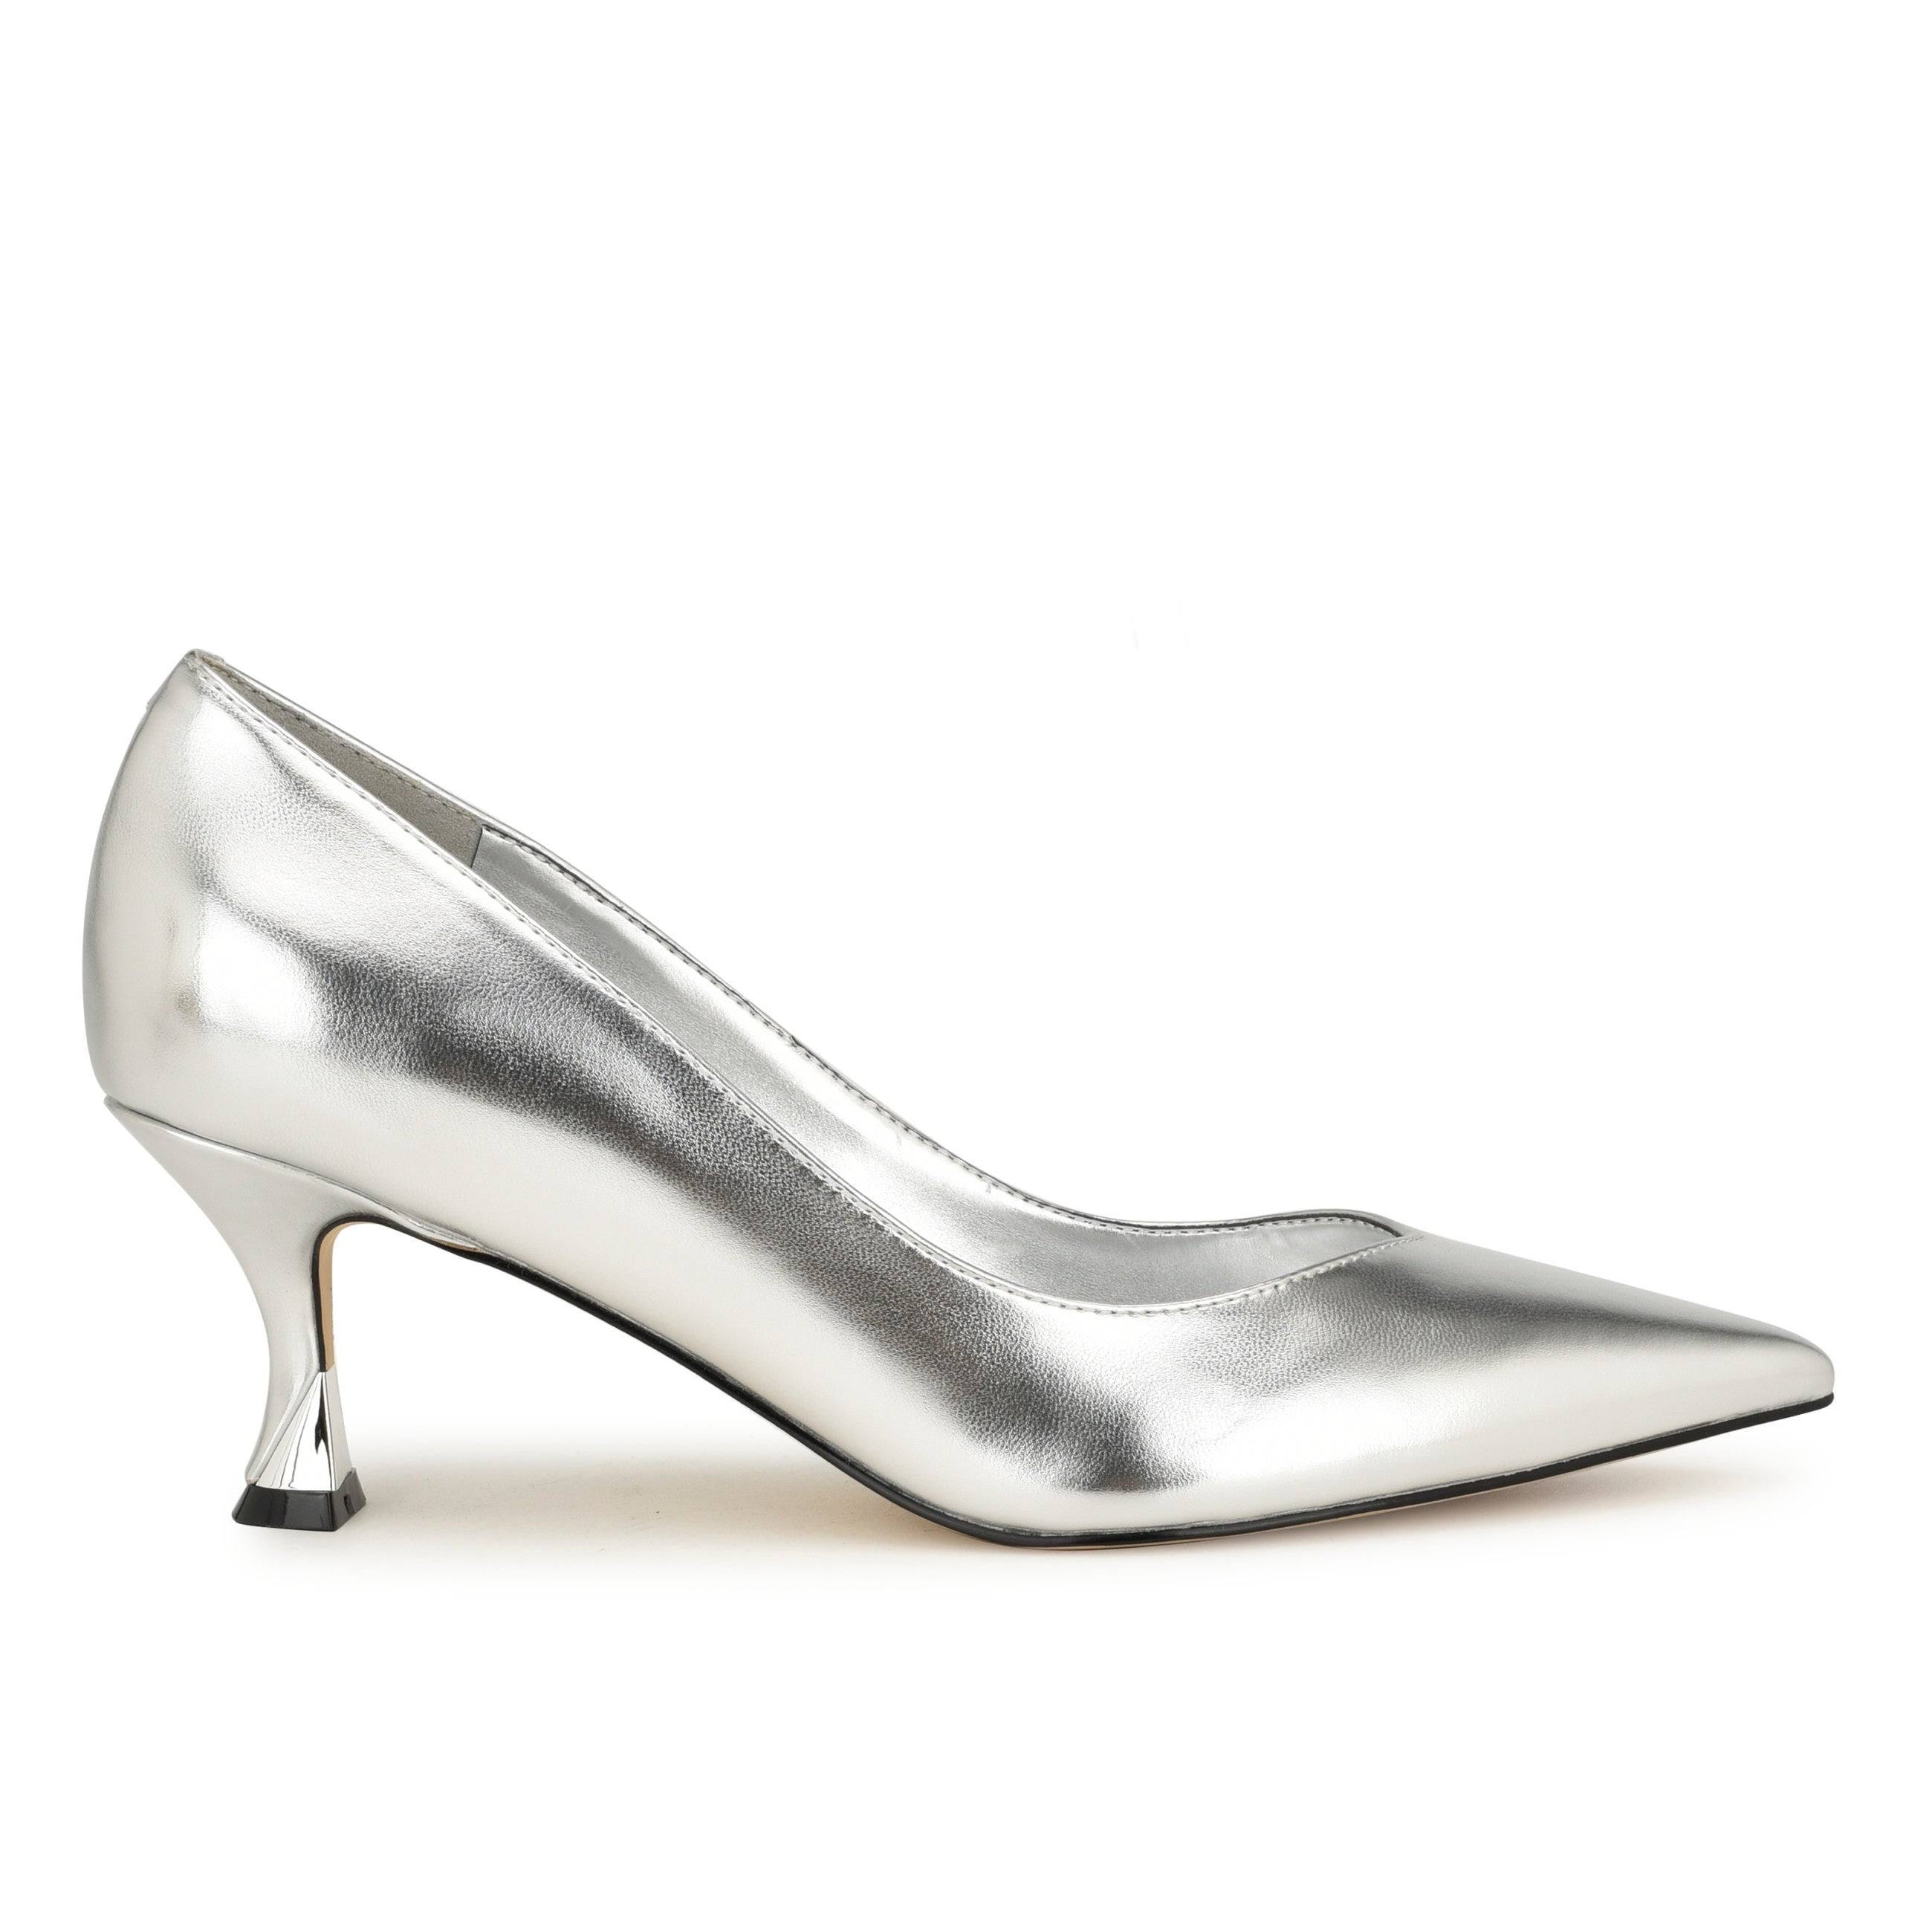 Silver Pointed Toe Kitten Heels by Nine West | Image